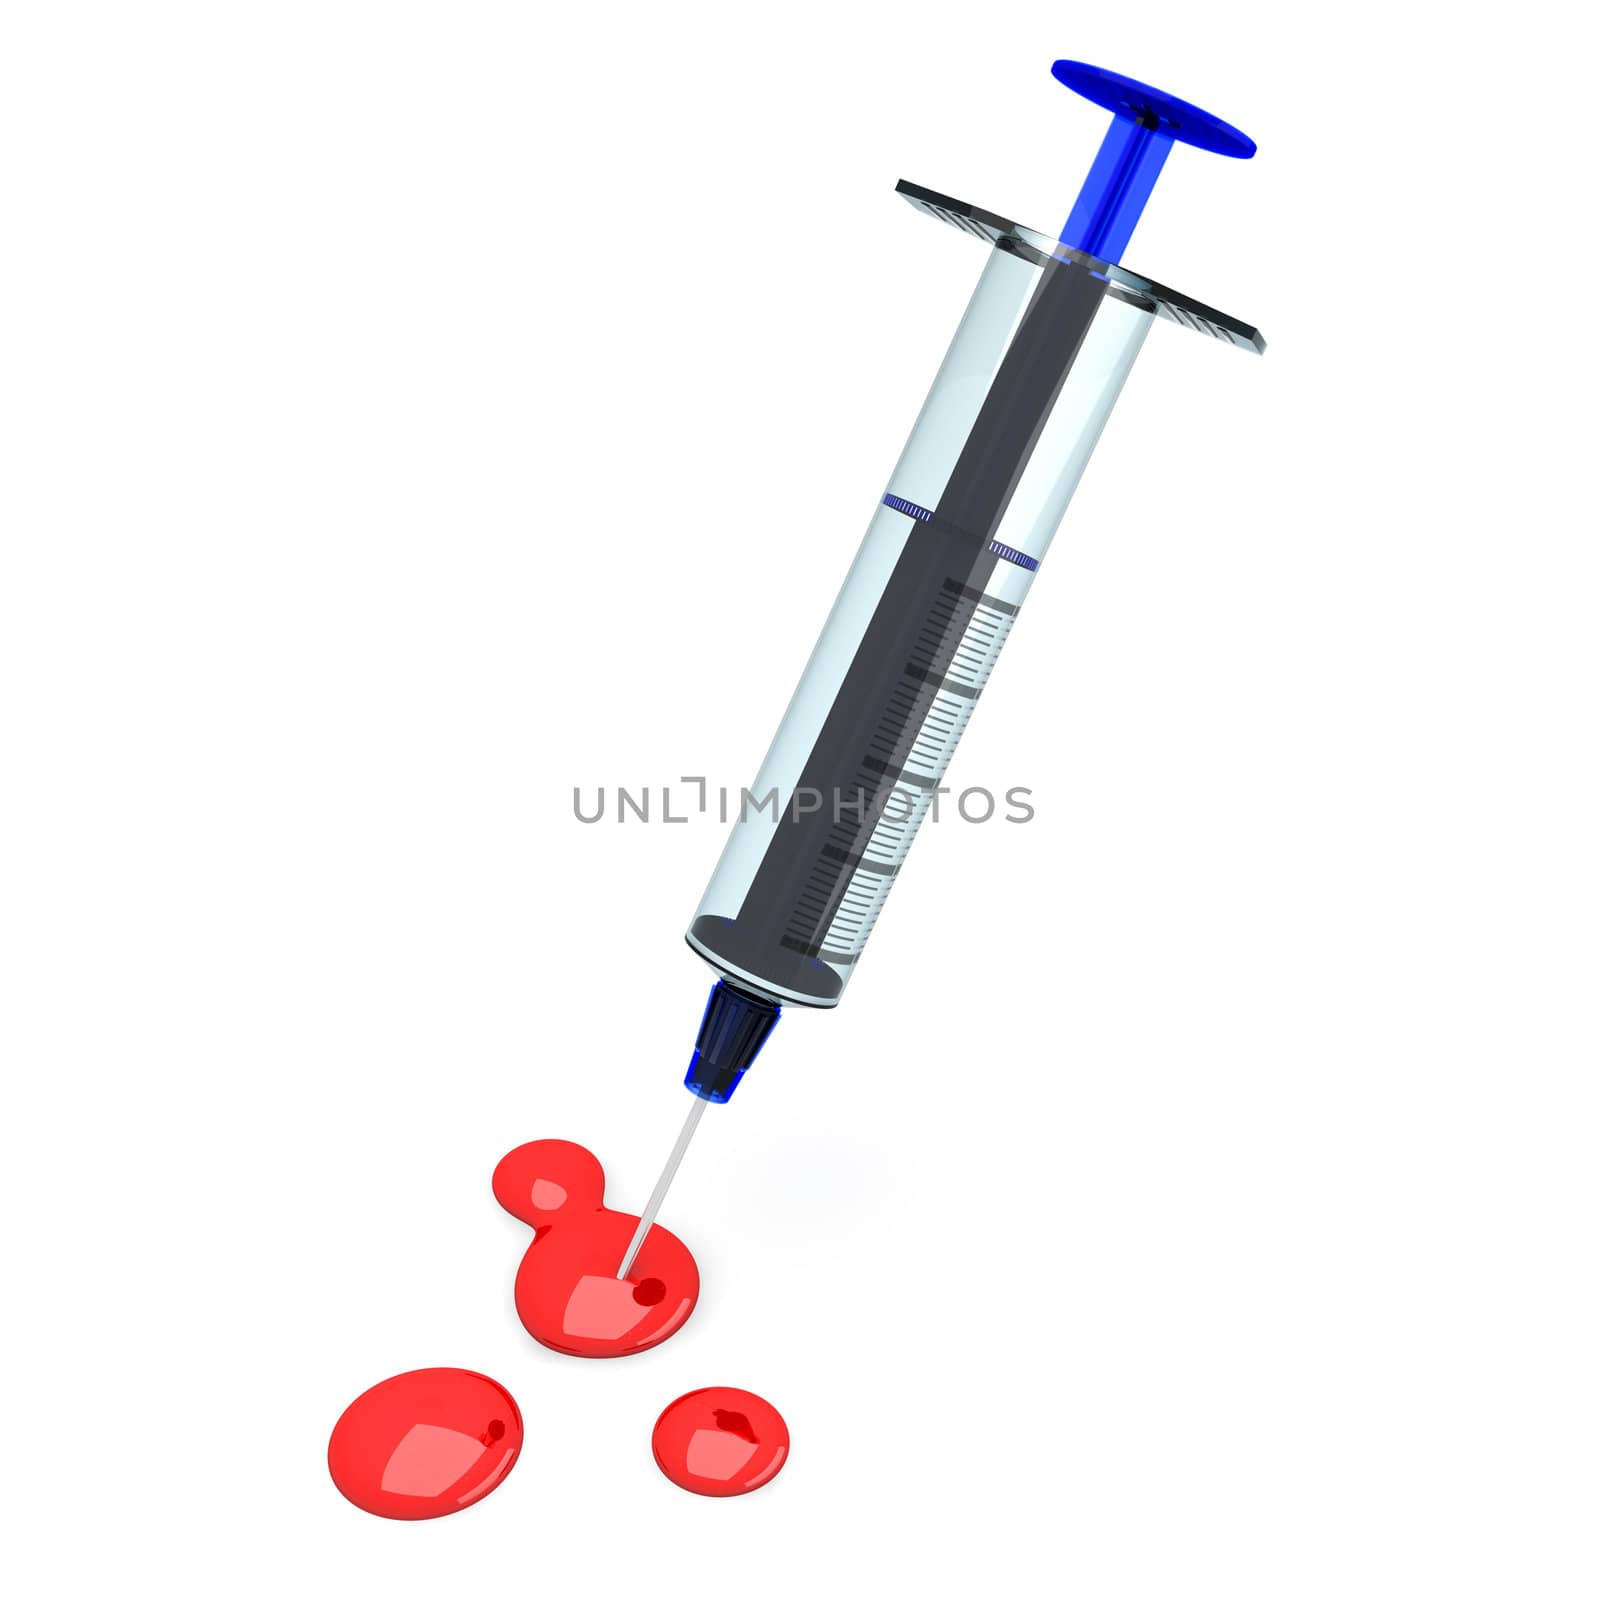 A medical syringe. 3D rendered Illustration. Isolated on white.